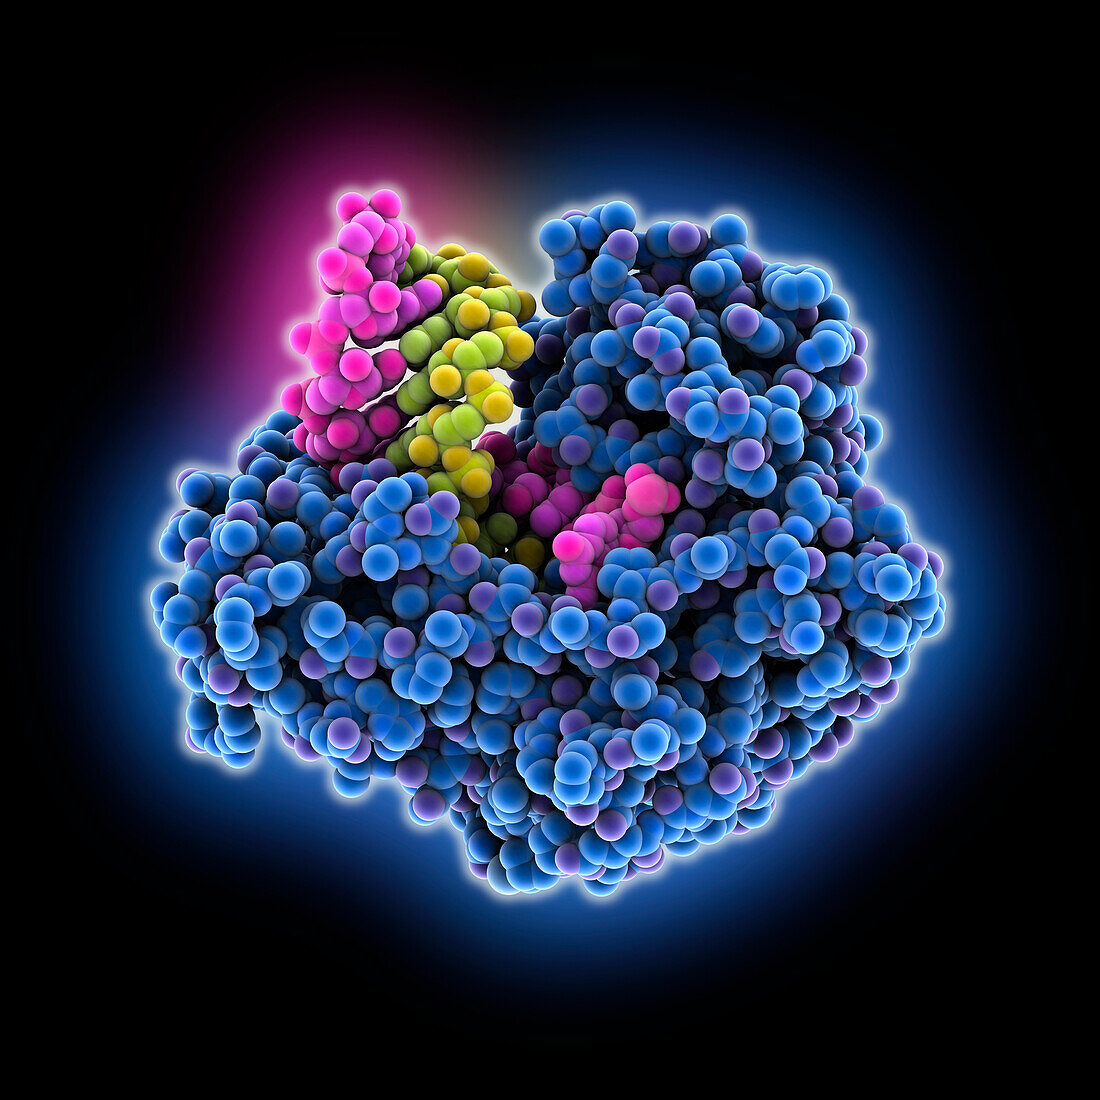 Enterovirus polymerase elongation complex, molecular model